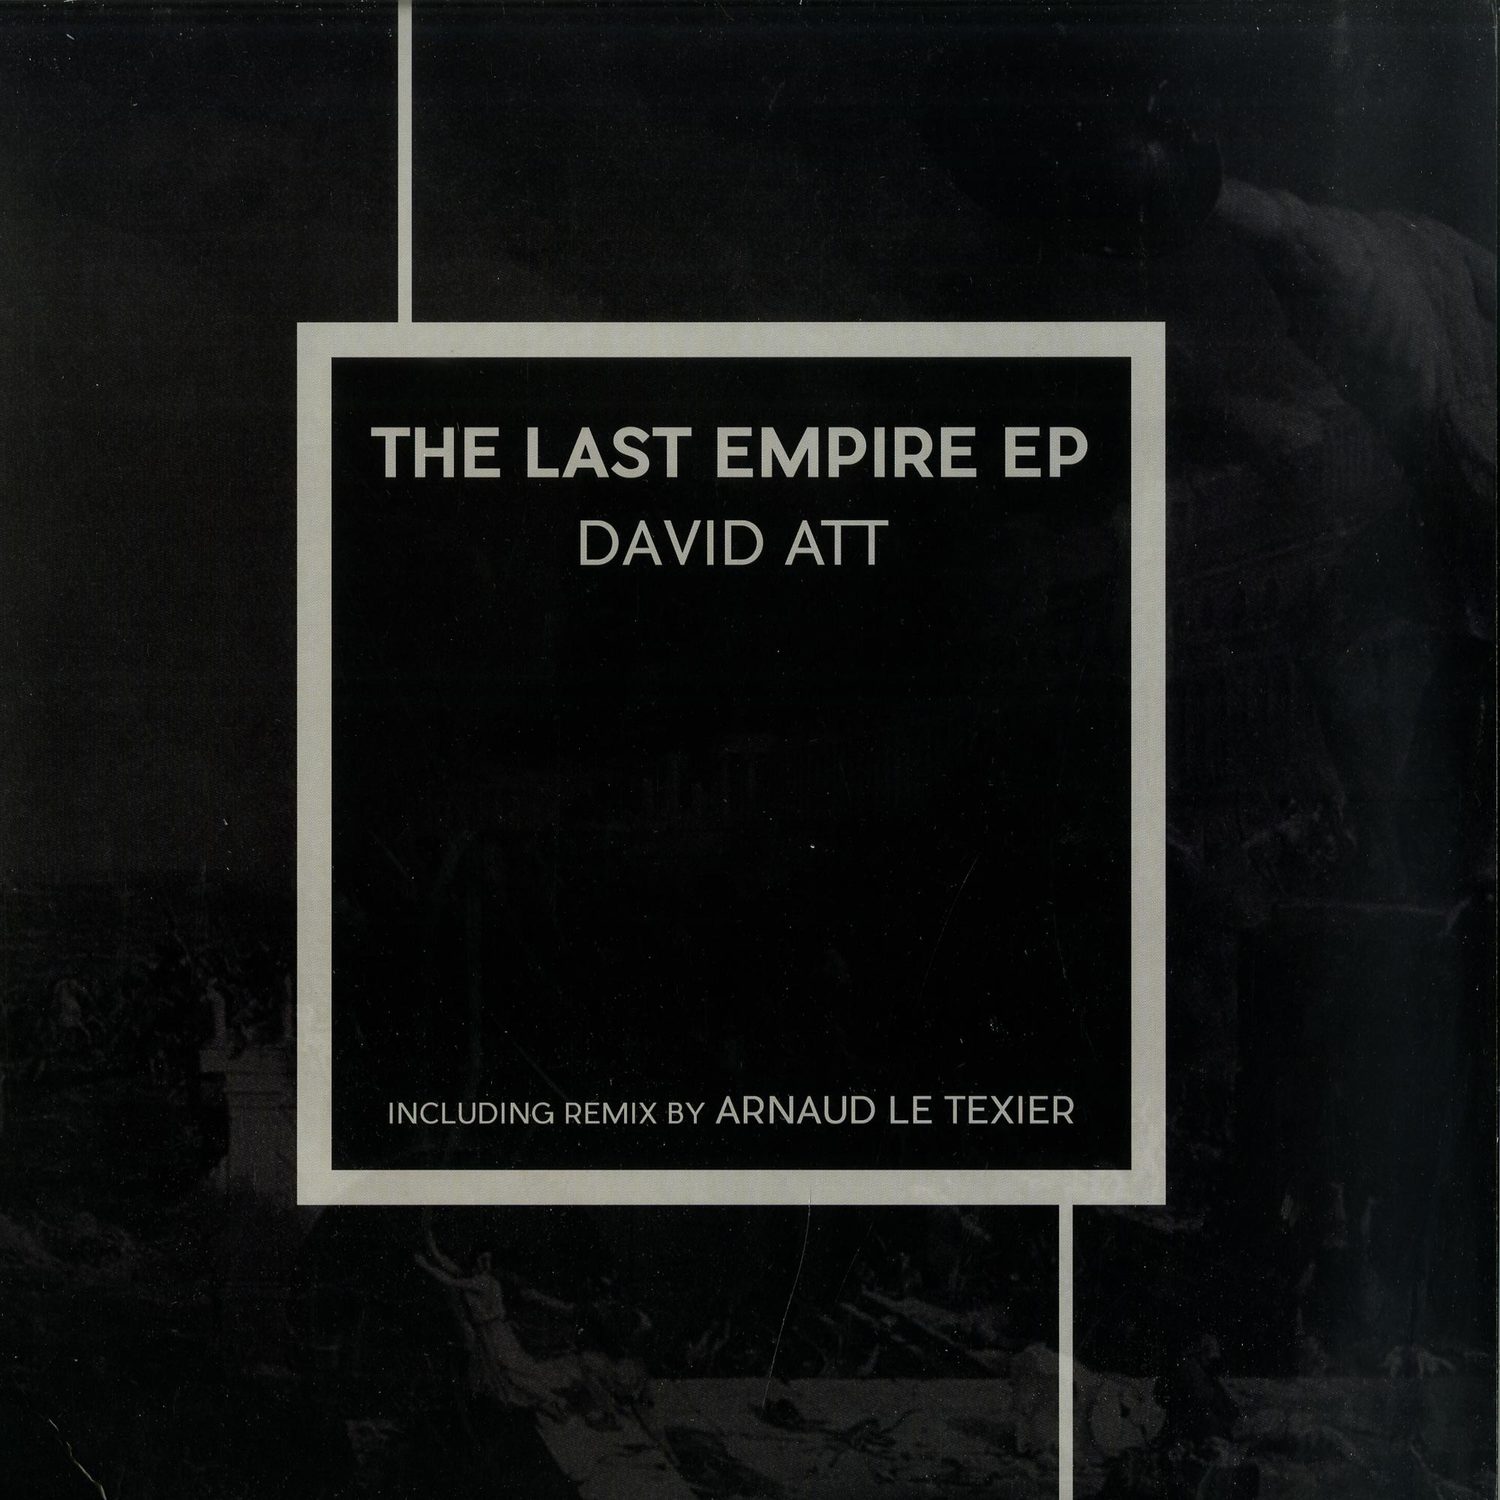 David Att - THE LAST EMPIRE EP